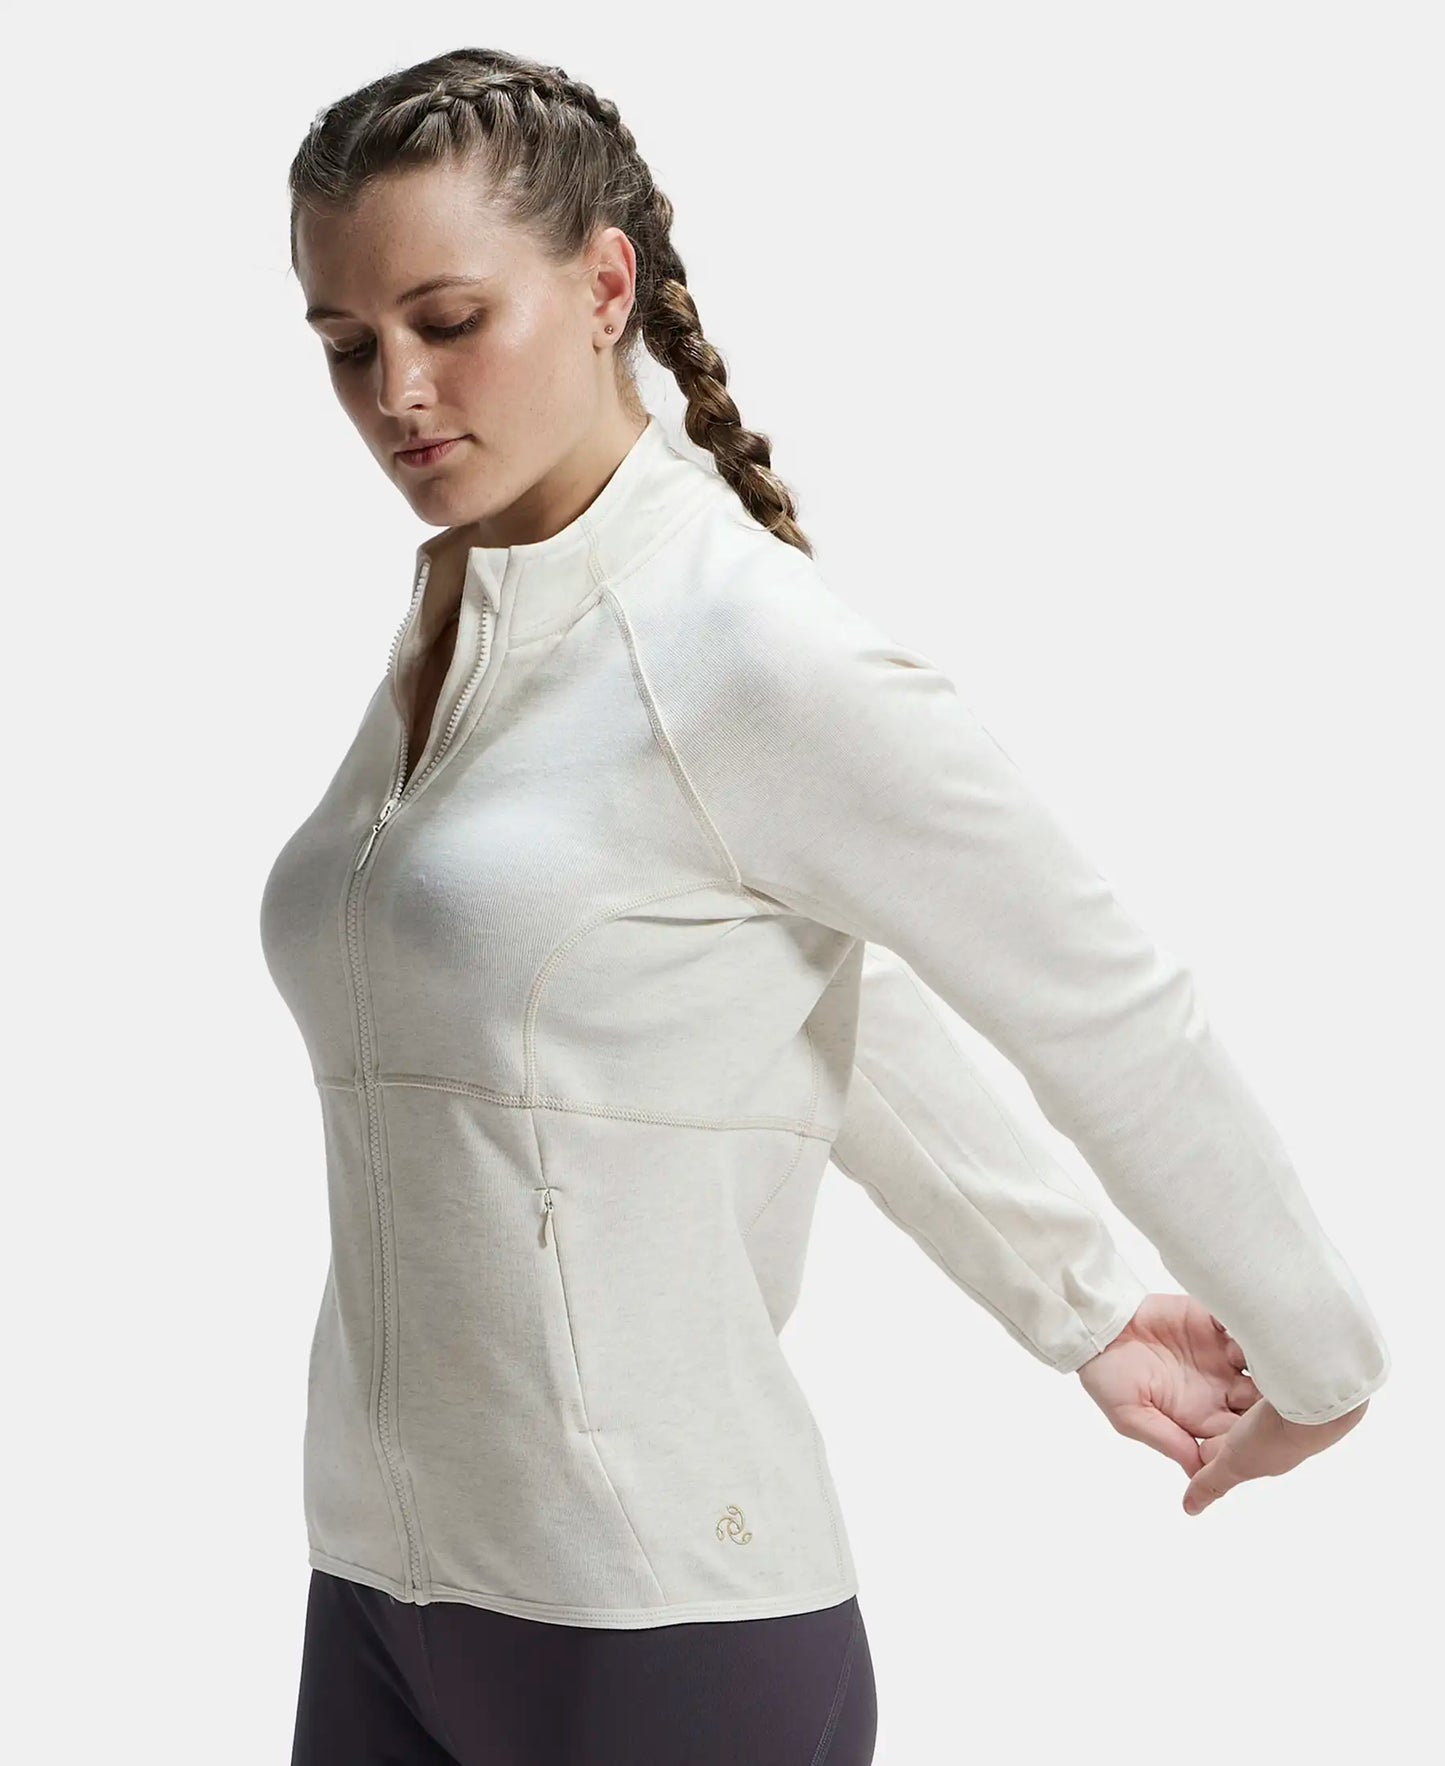 Polyester Cotton Interlock Slim Fit Full Zip High Neck Jacket with Convenient Zipper Pockets - Cream Melange-5